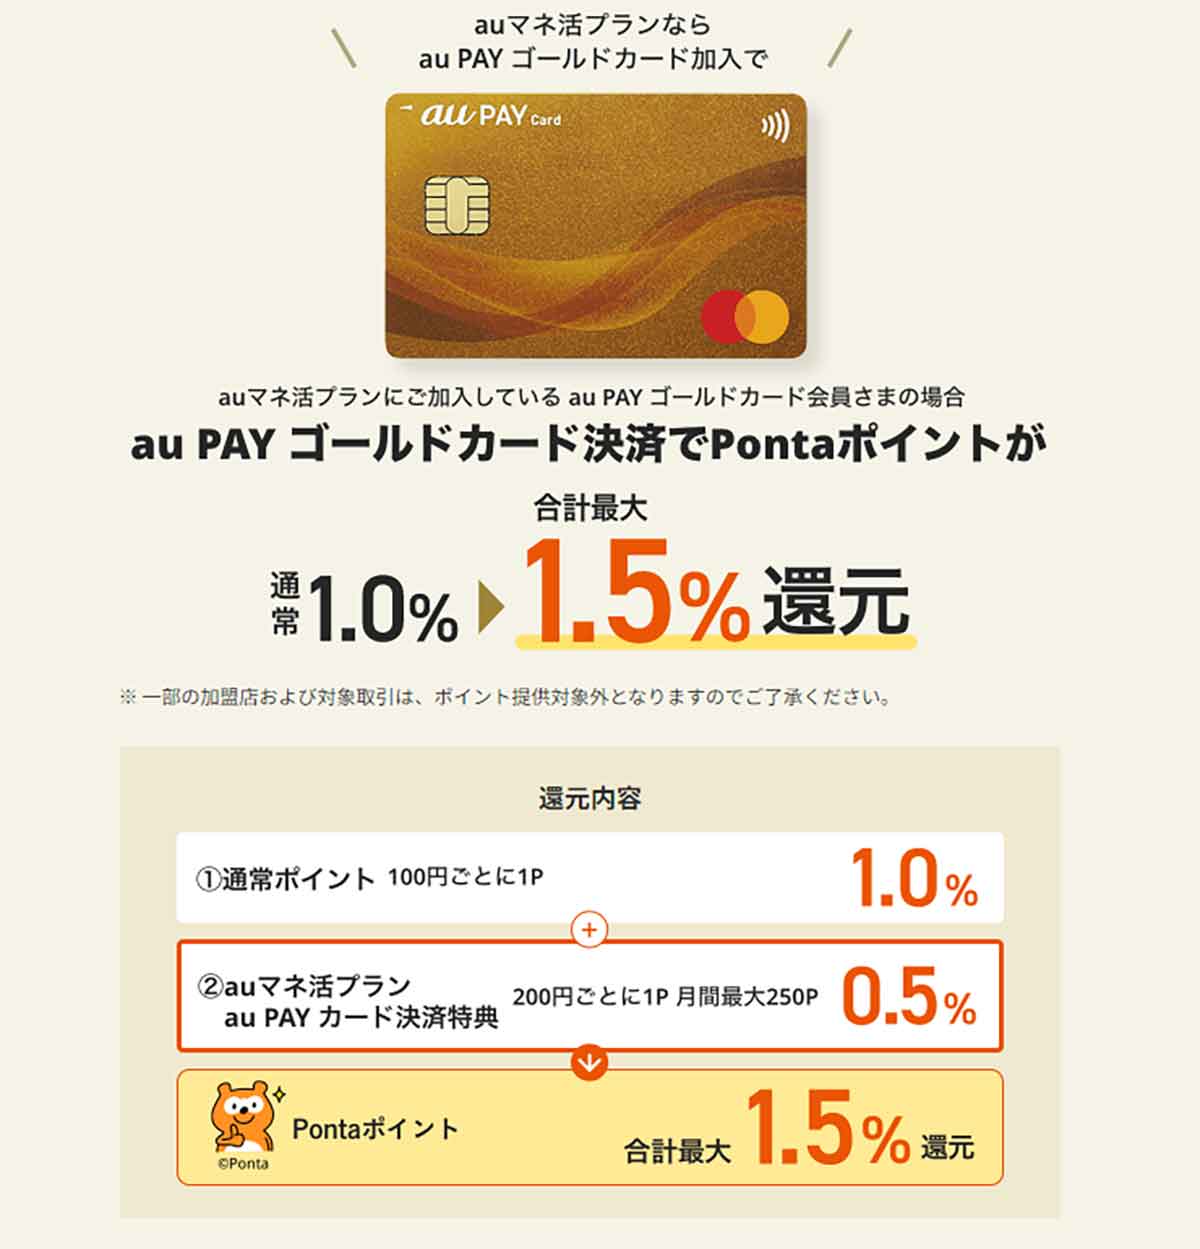 【特典3】au PAY カード決済特典